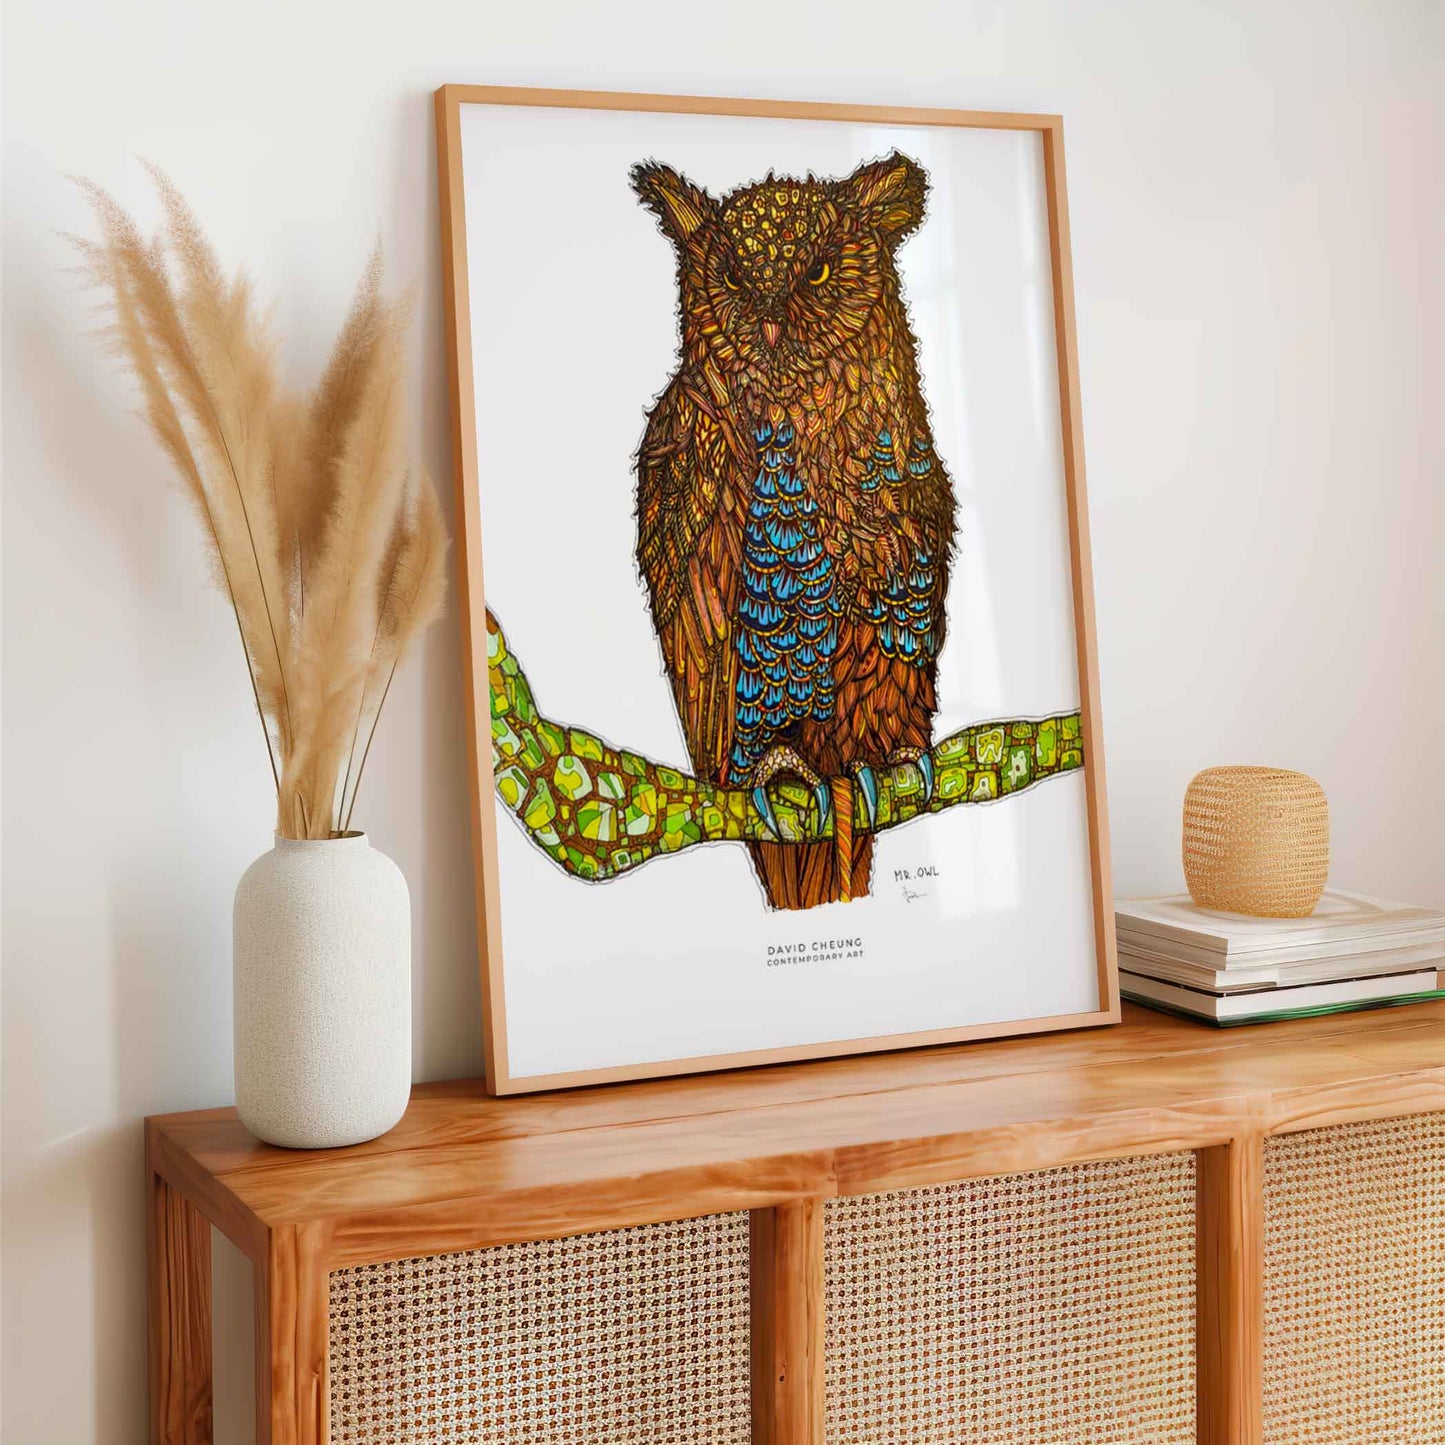 Art print "Mr Owl"